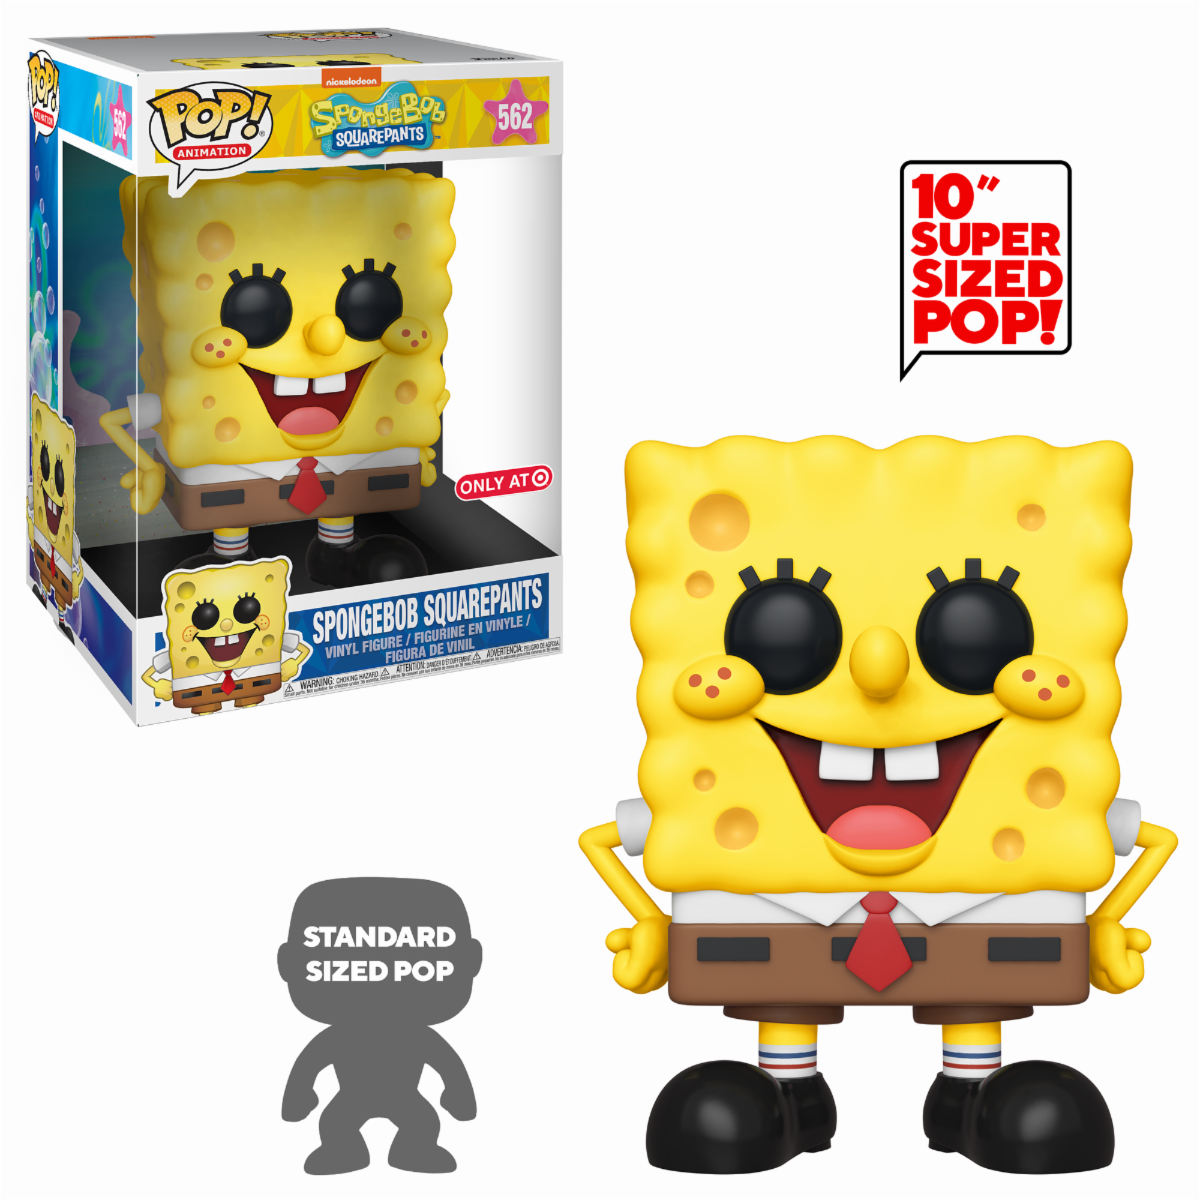 Spongebob Squarepants 10" Super Sized Pop! Vinyl